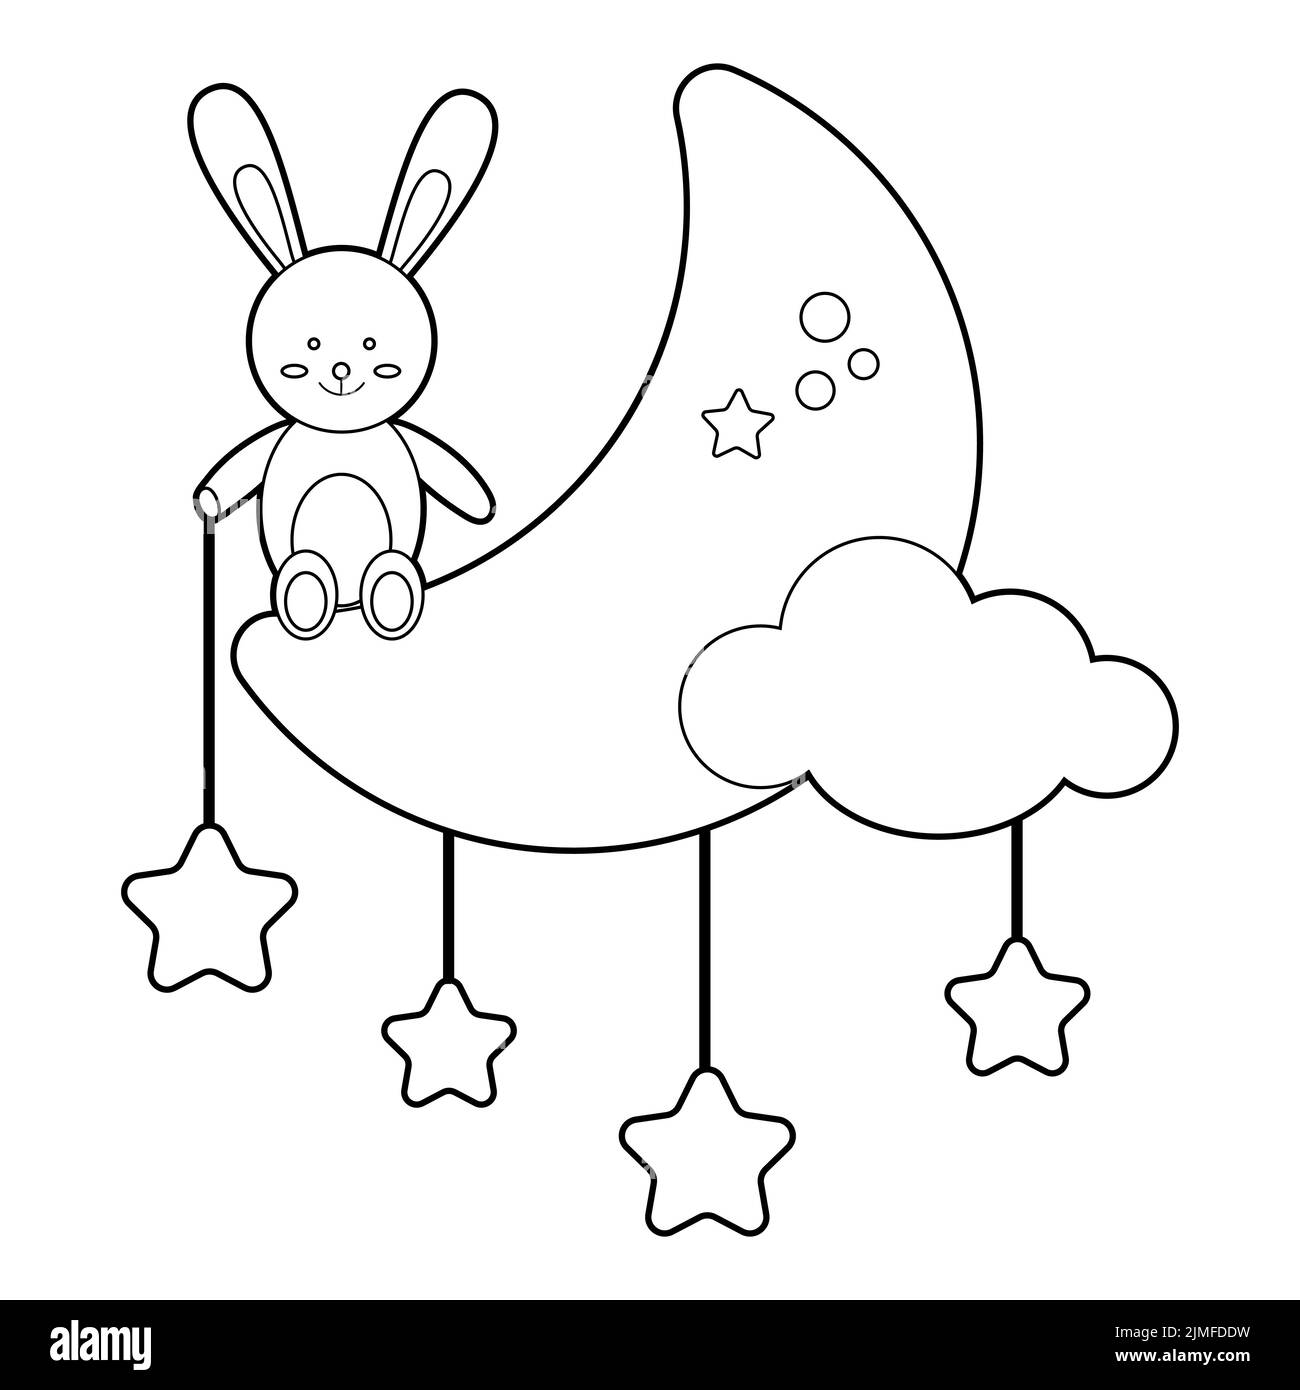 Rabbit cartoon Black and White Stock Photos & Images - Alamy